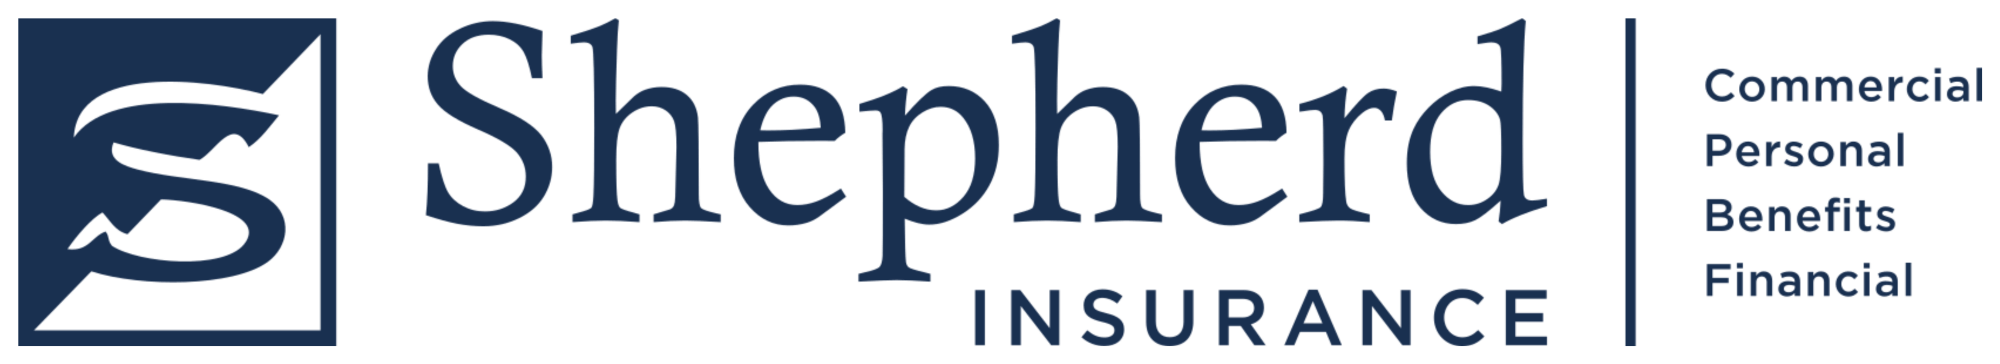 Shepherd Insurance